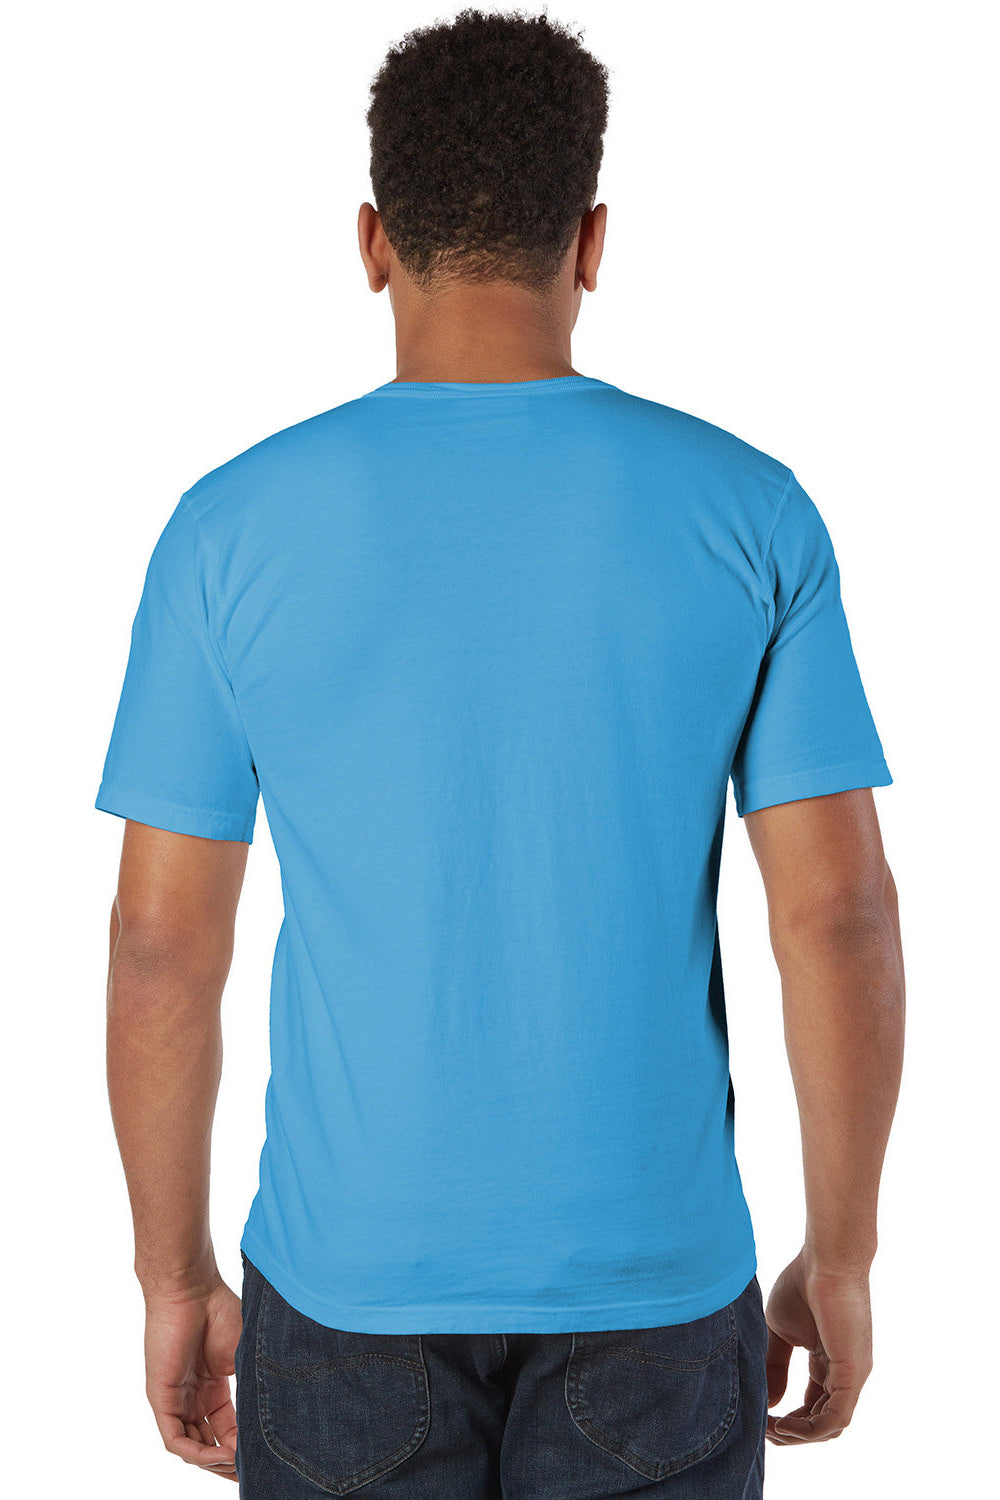 Champion CD100 Mens Garment Dyed Short Sleeve Crewneck T-Shirt Delicate Blue Model Back